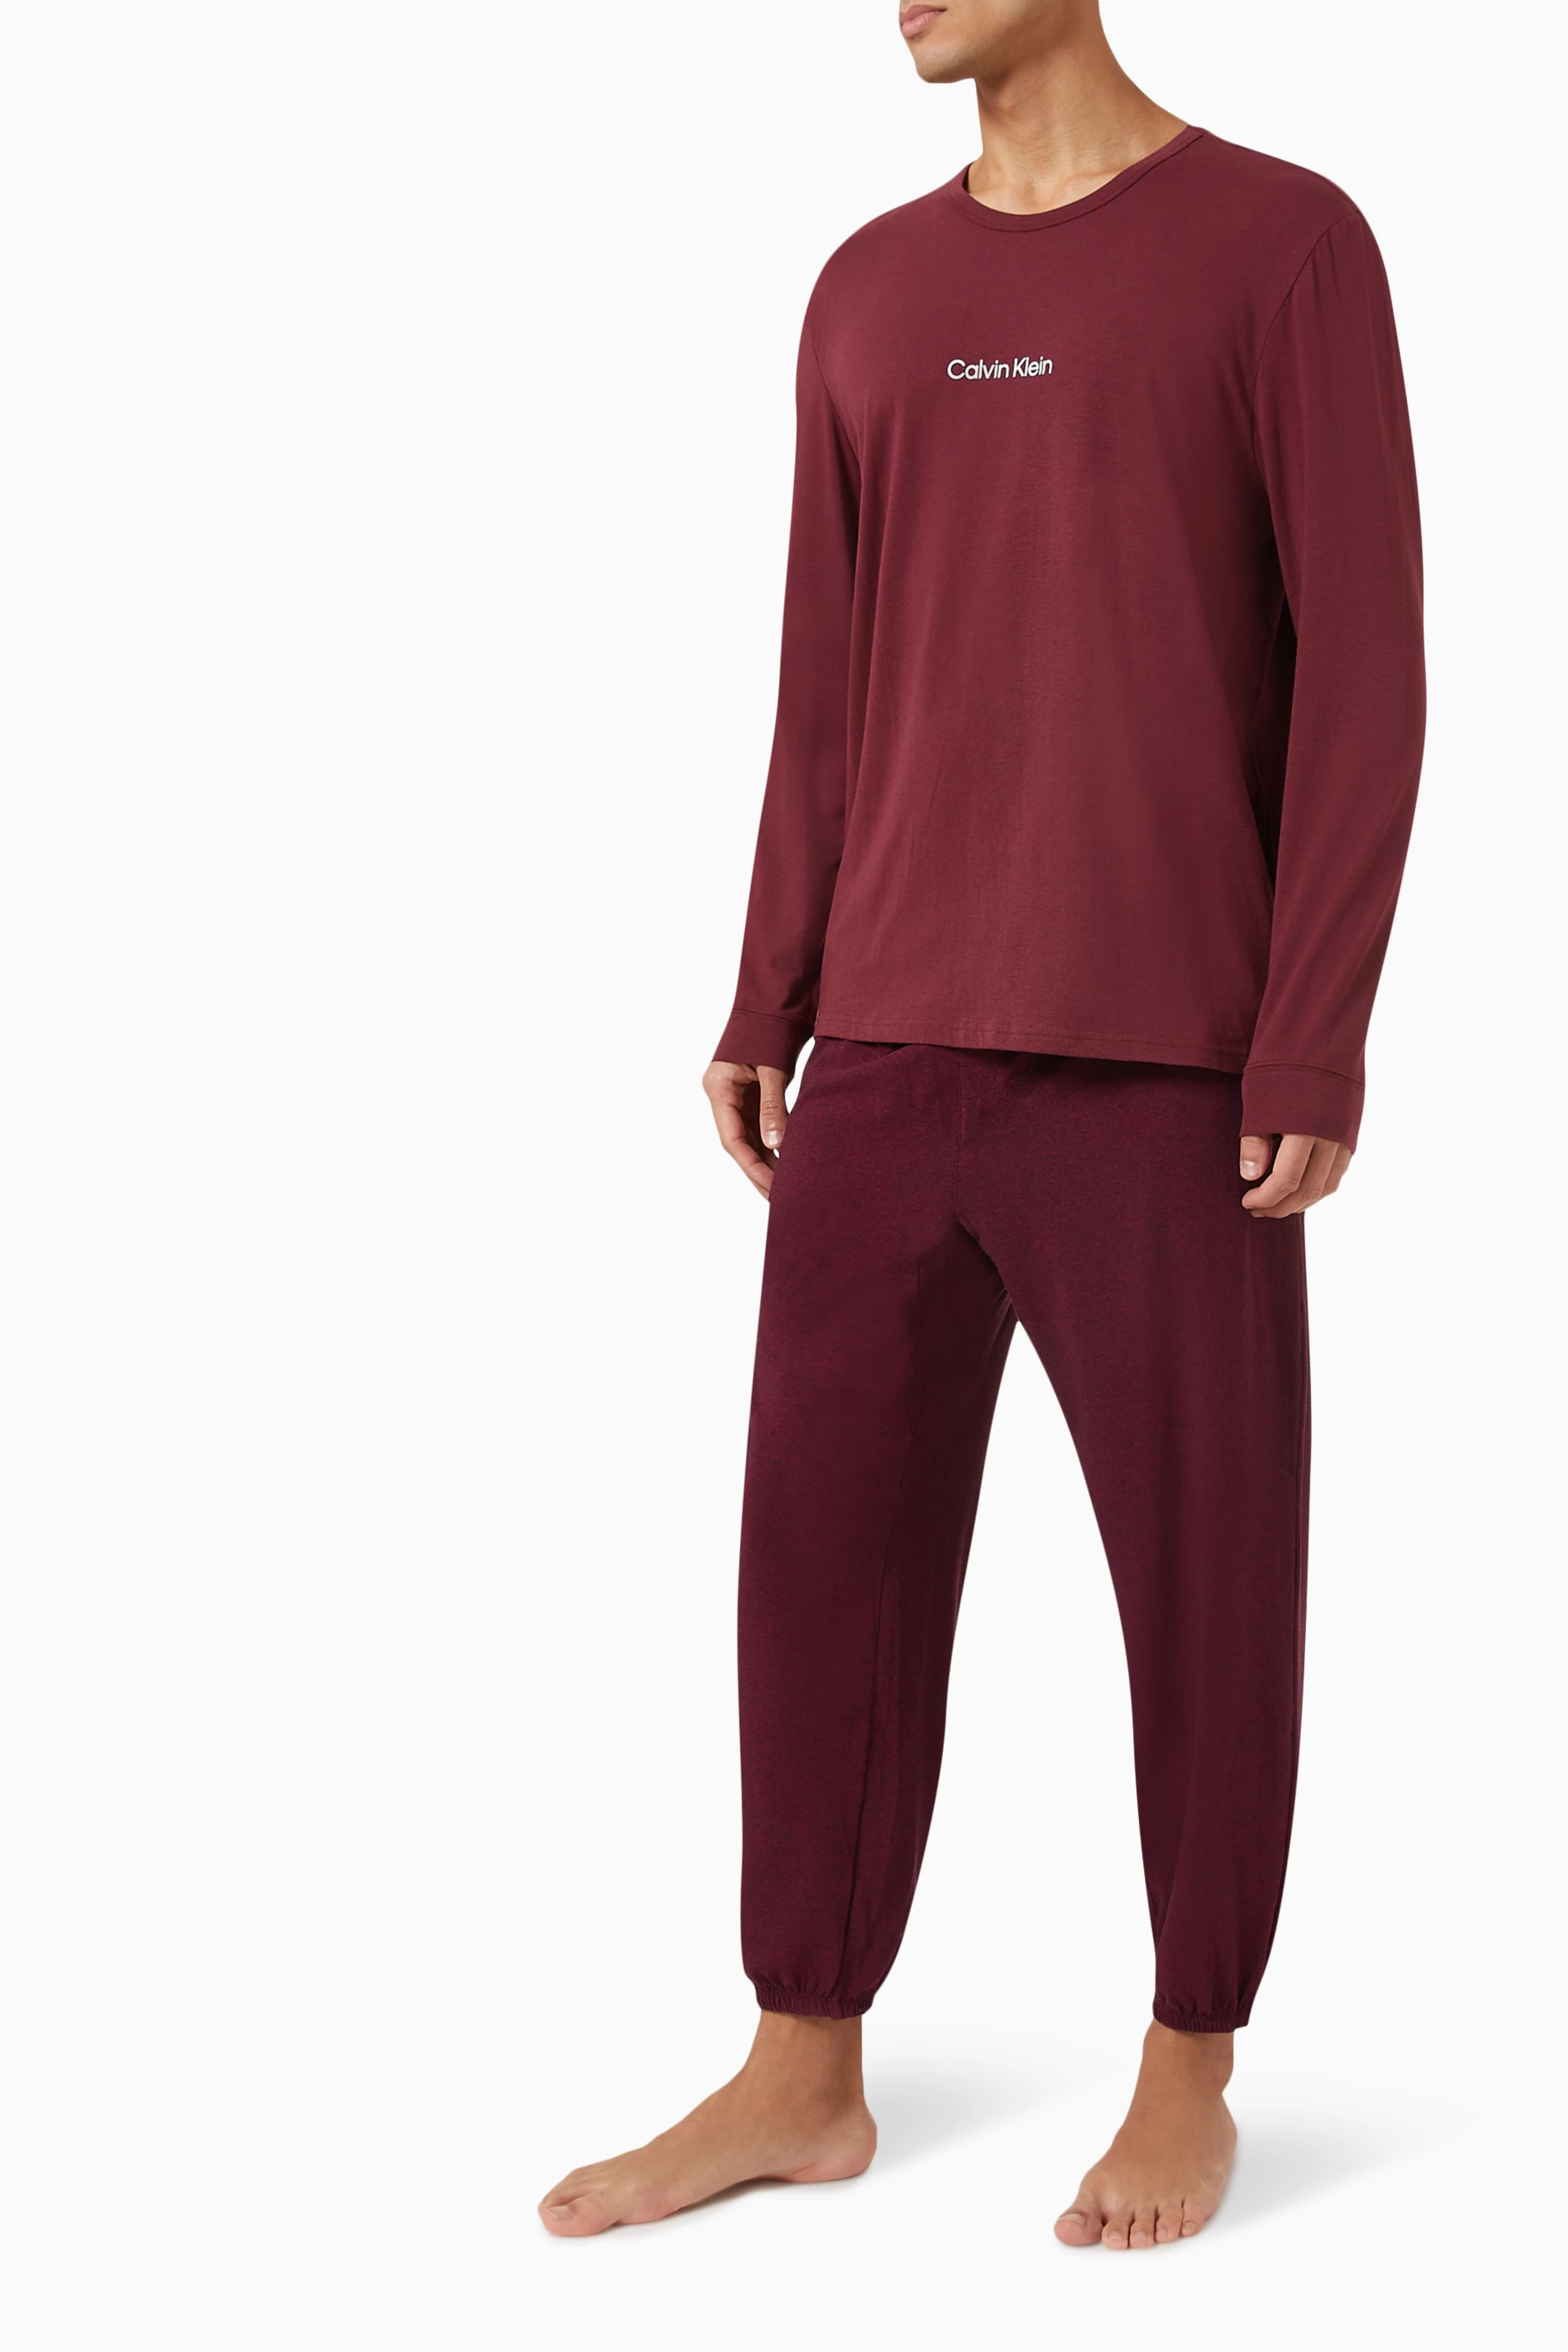 Shop Calvin Klein Unisex Street Style Co-ord Matching Sets Sweats  Loungewear by PrimeJacuzzi